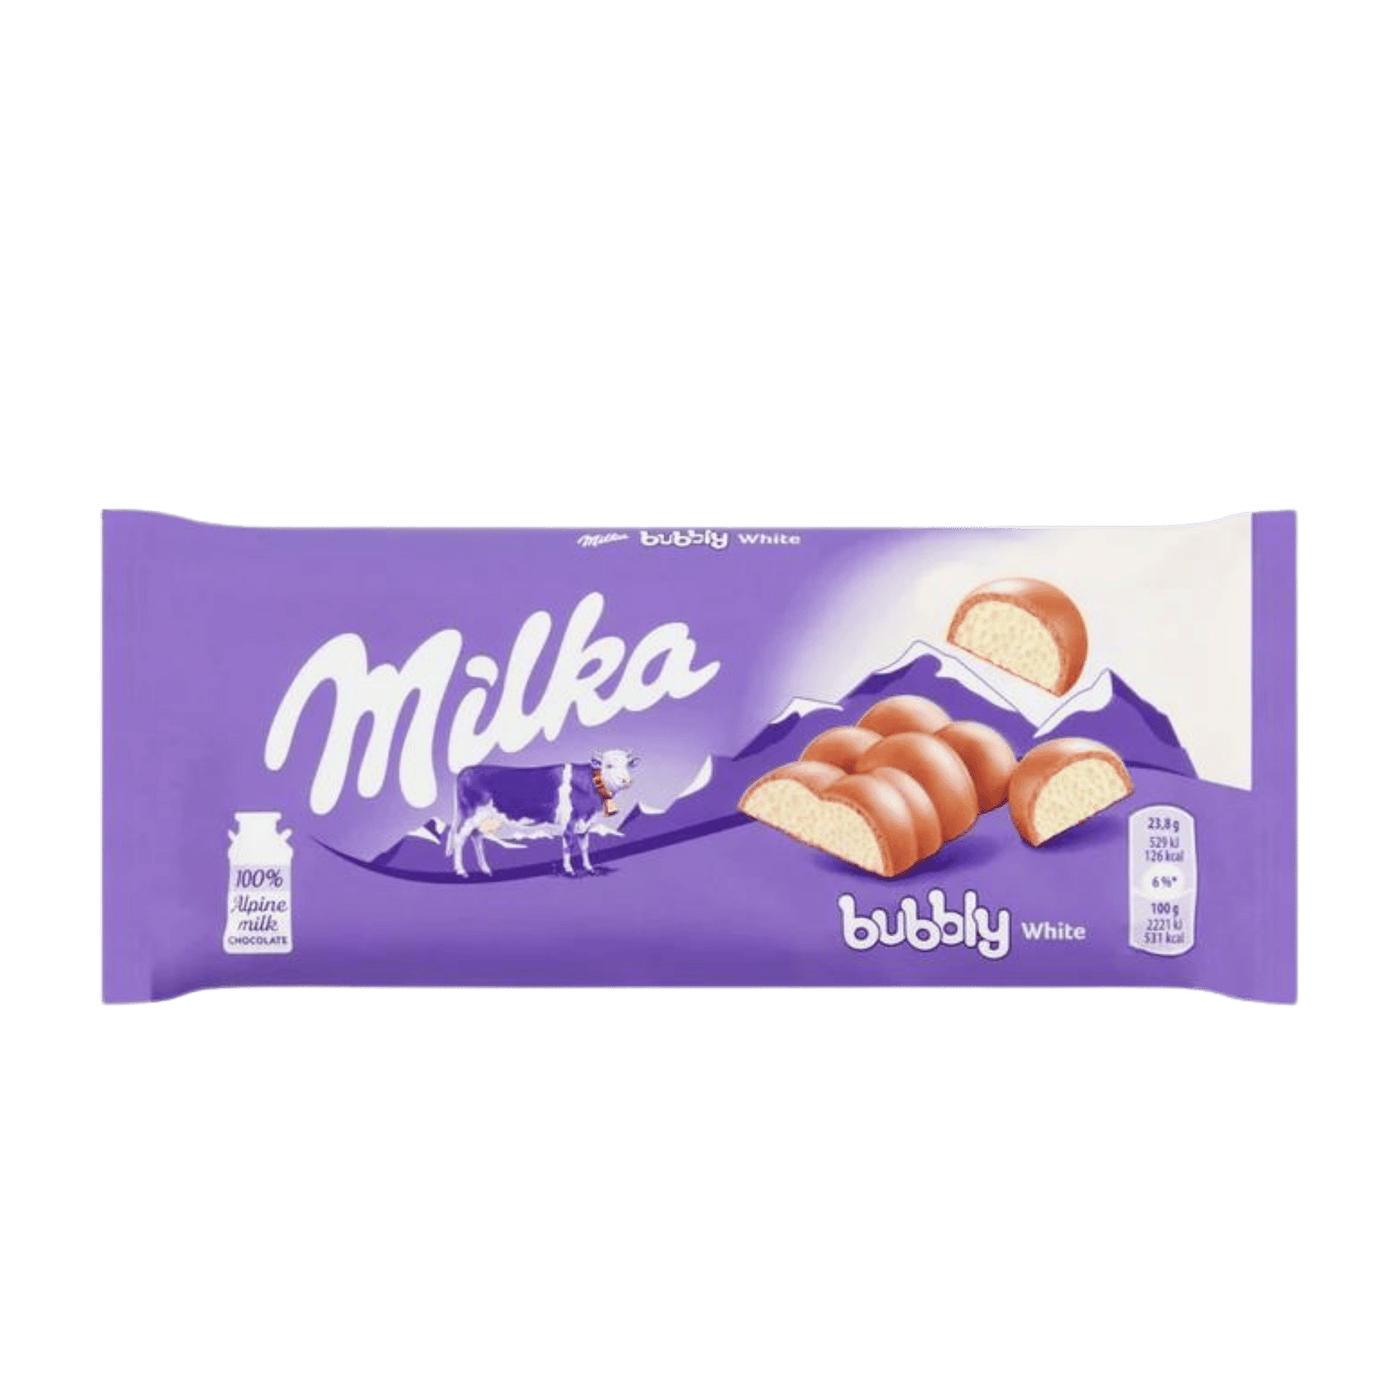 Milka Chocolate Bar